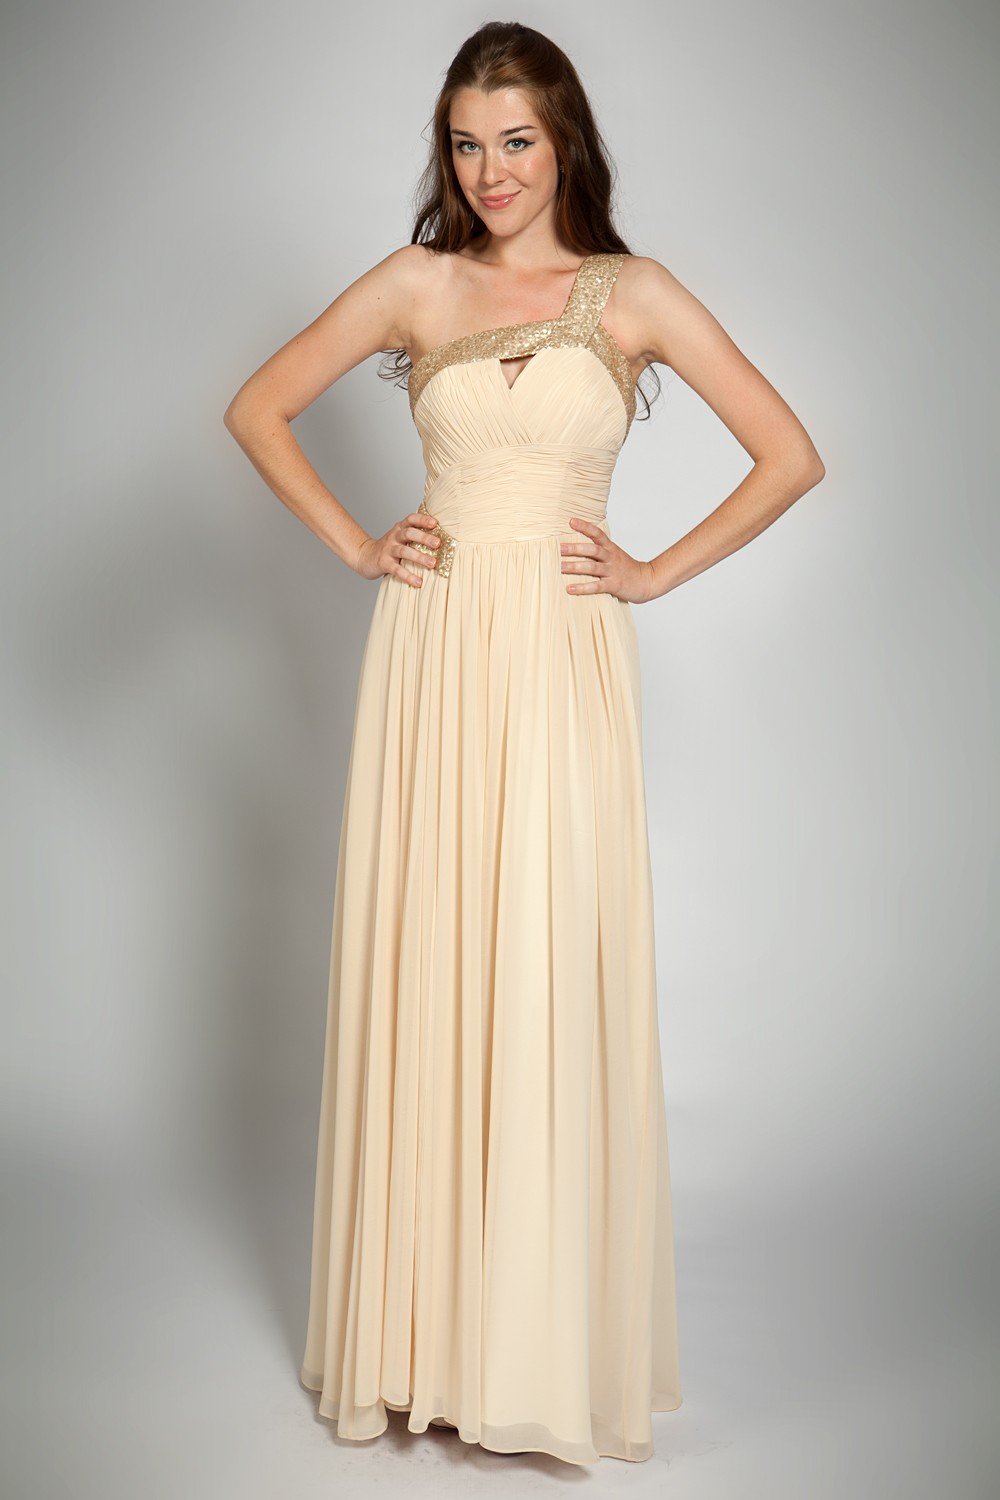 Grecian Prom Dresses 2011